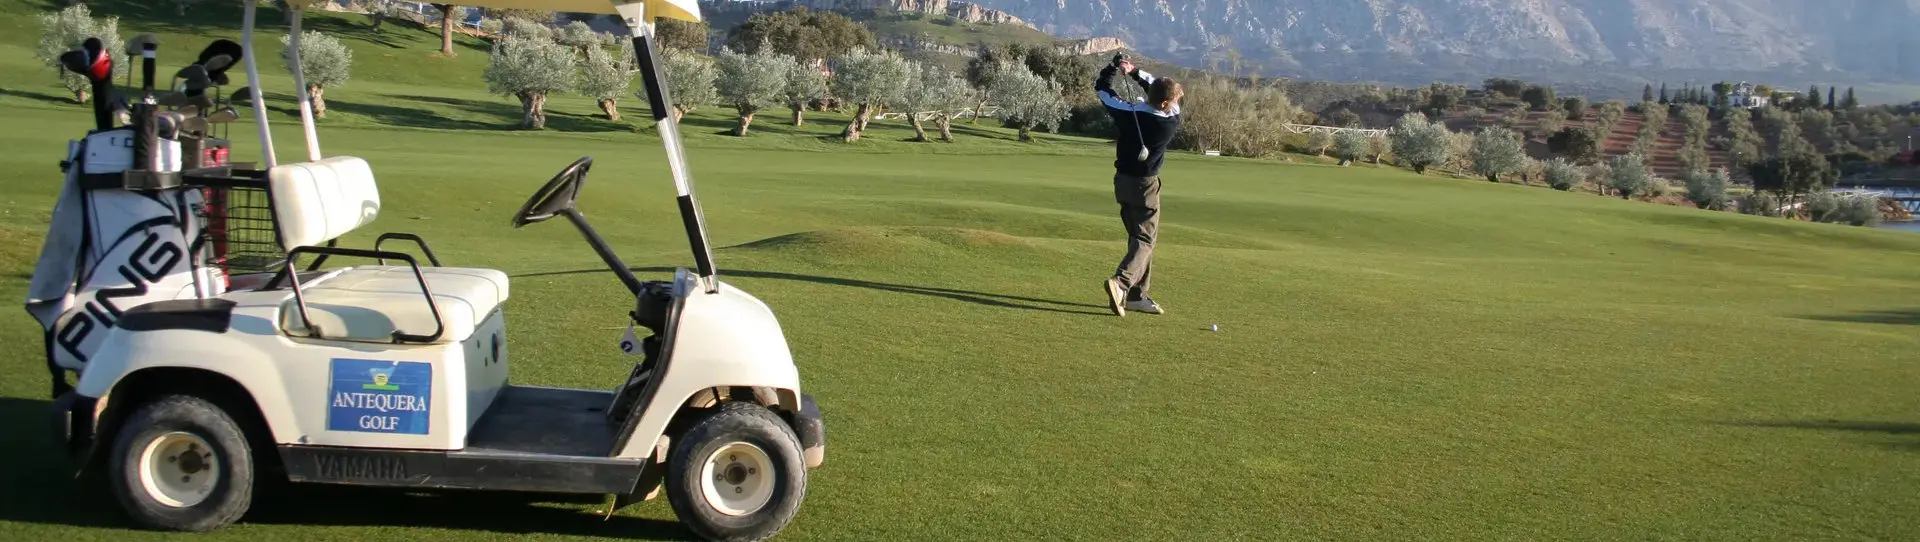 Spain golf courses - Antequera Golf - Photo 3